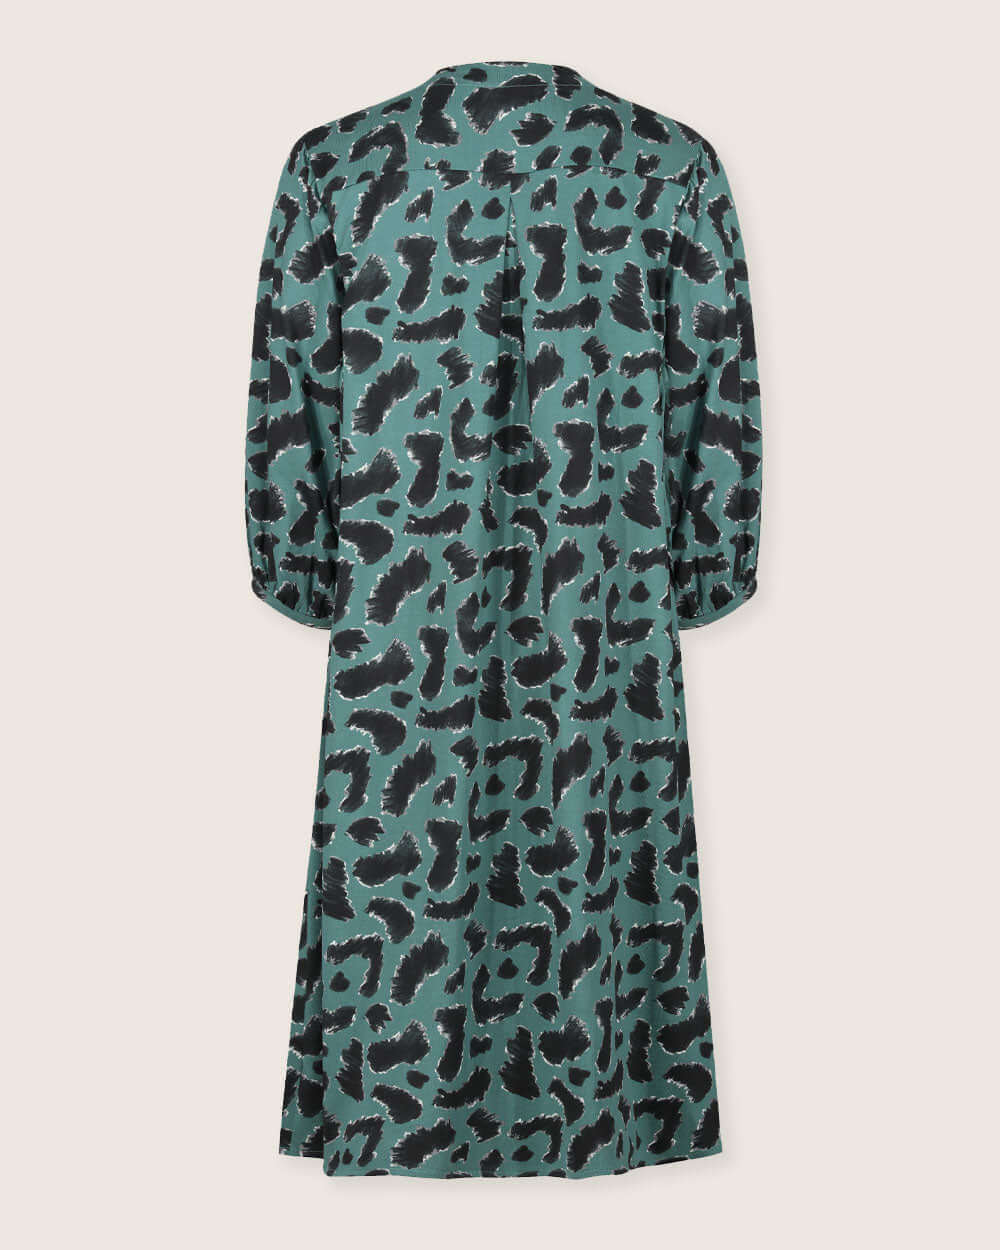 Clara Abstract Animal Print Dress